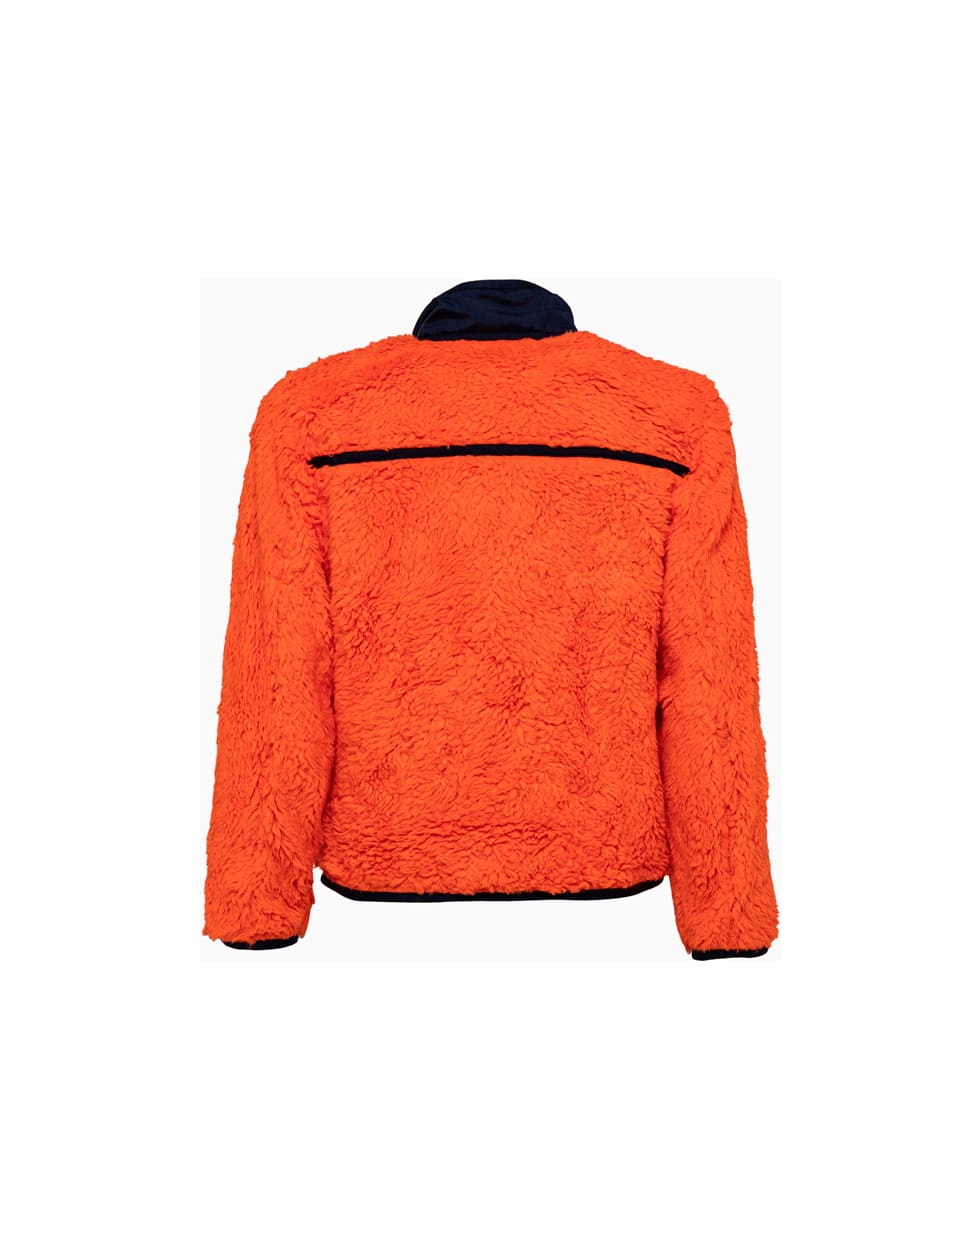 Ambush New Fleece Sweatshirt Bmea001f20fle001 | italist